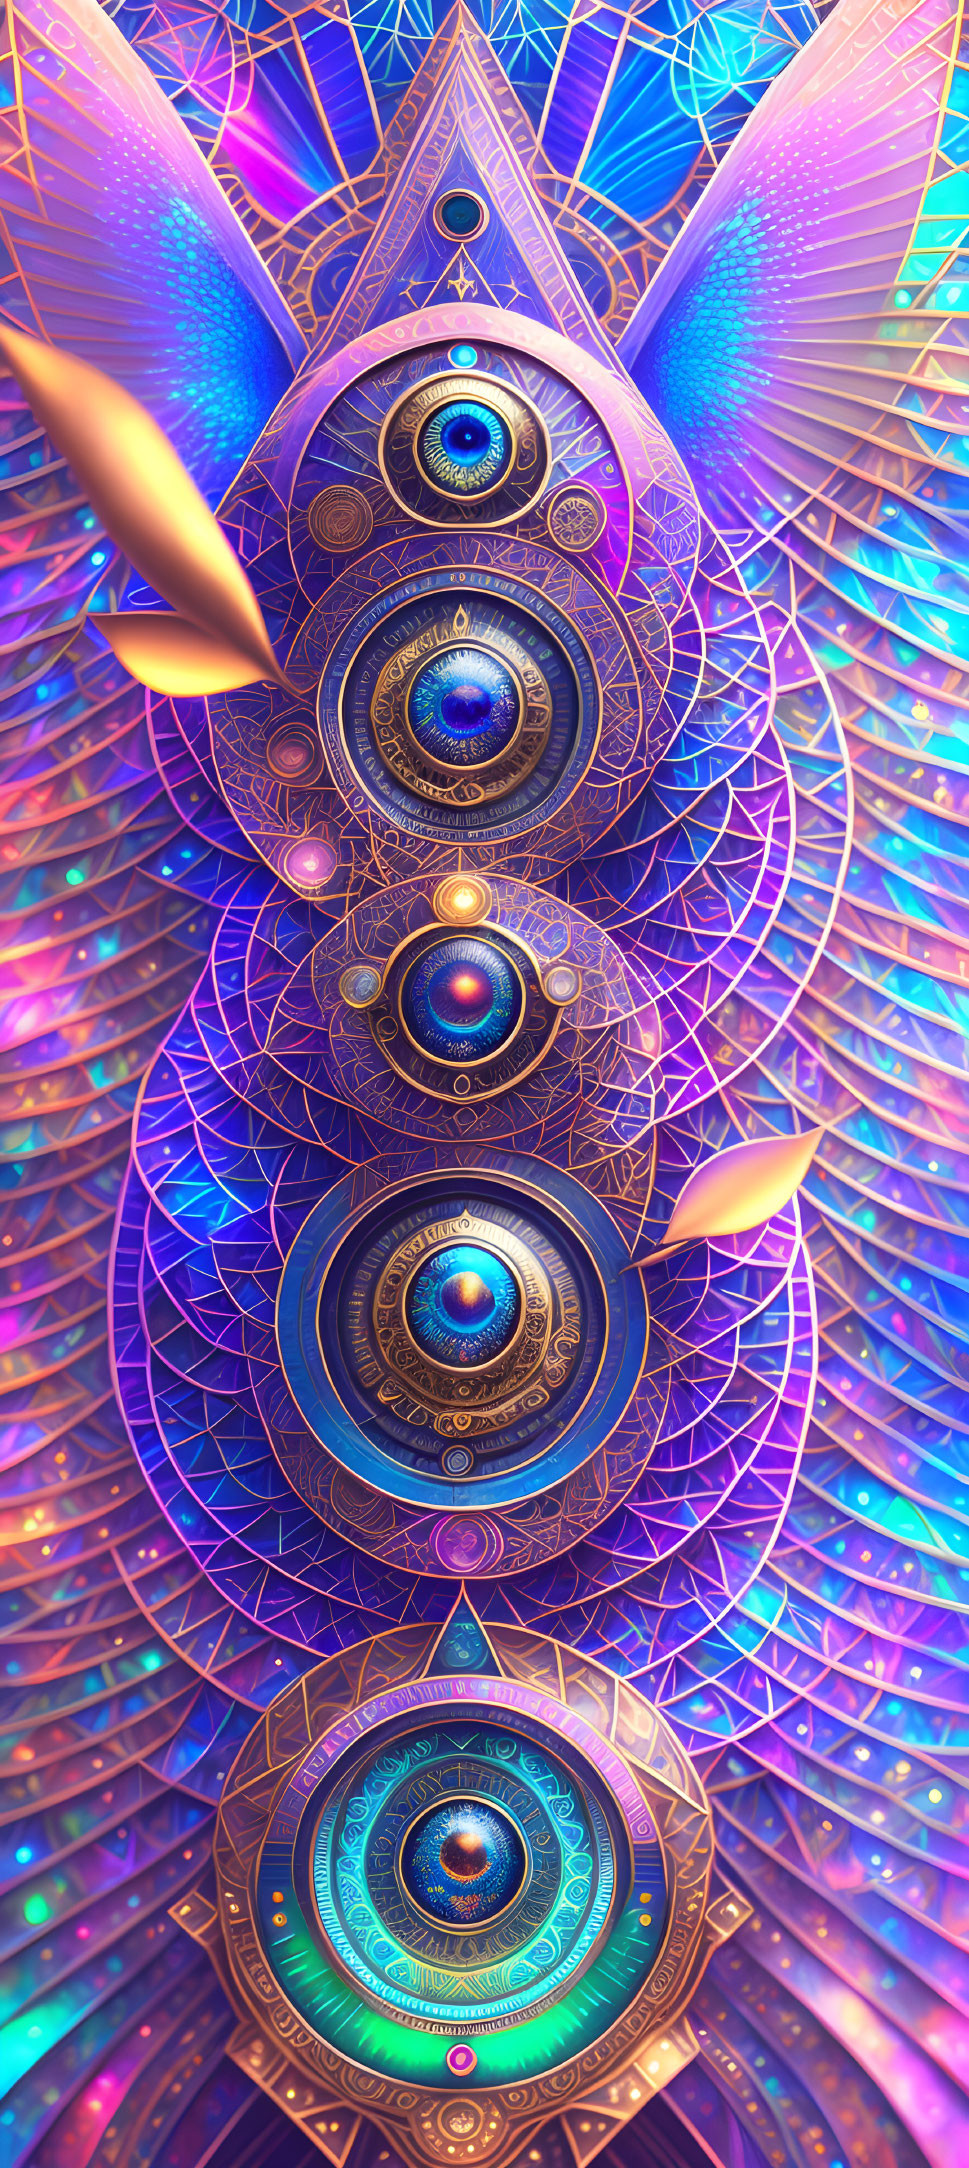 Colorful symmetrical mandala patterns in vertical orientation